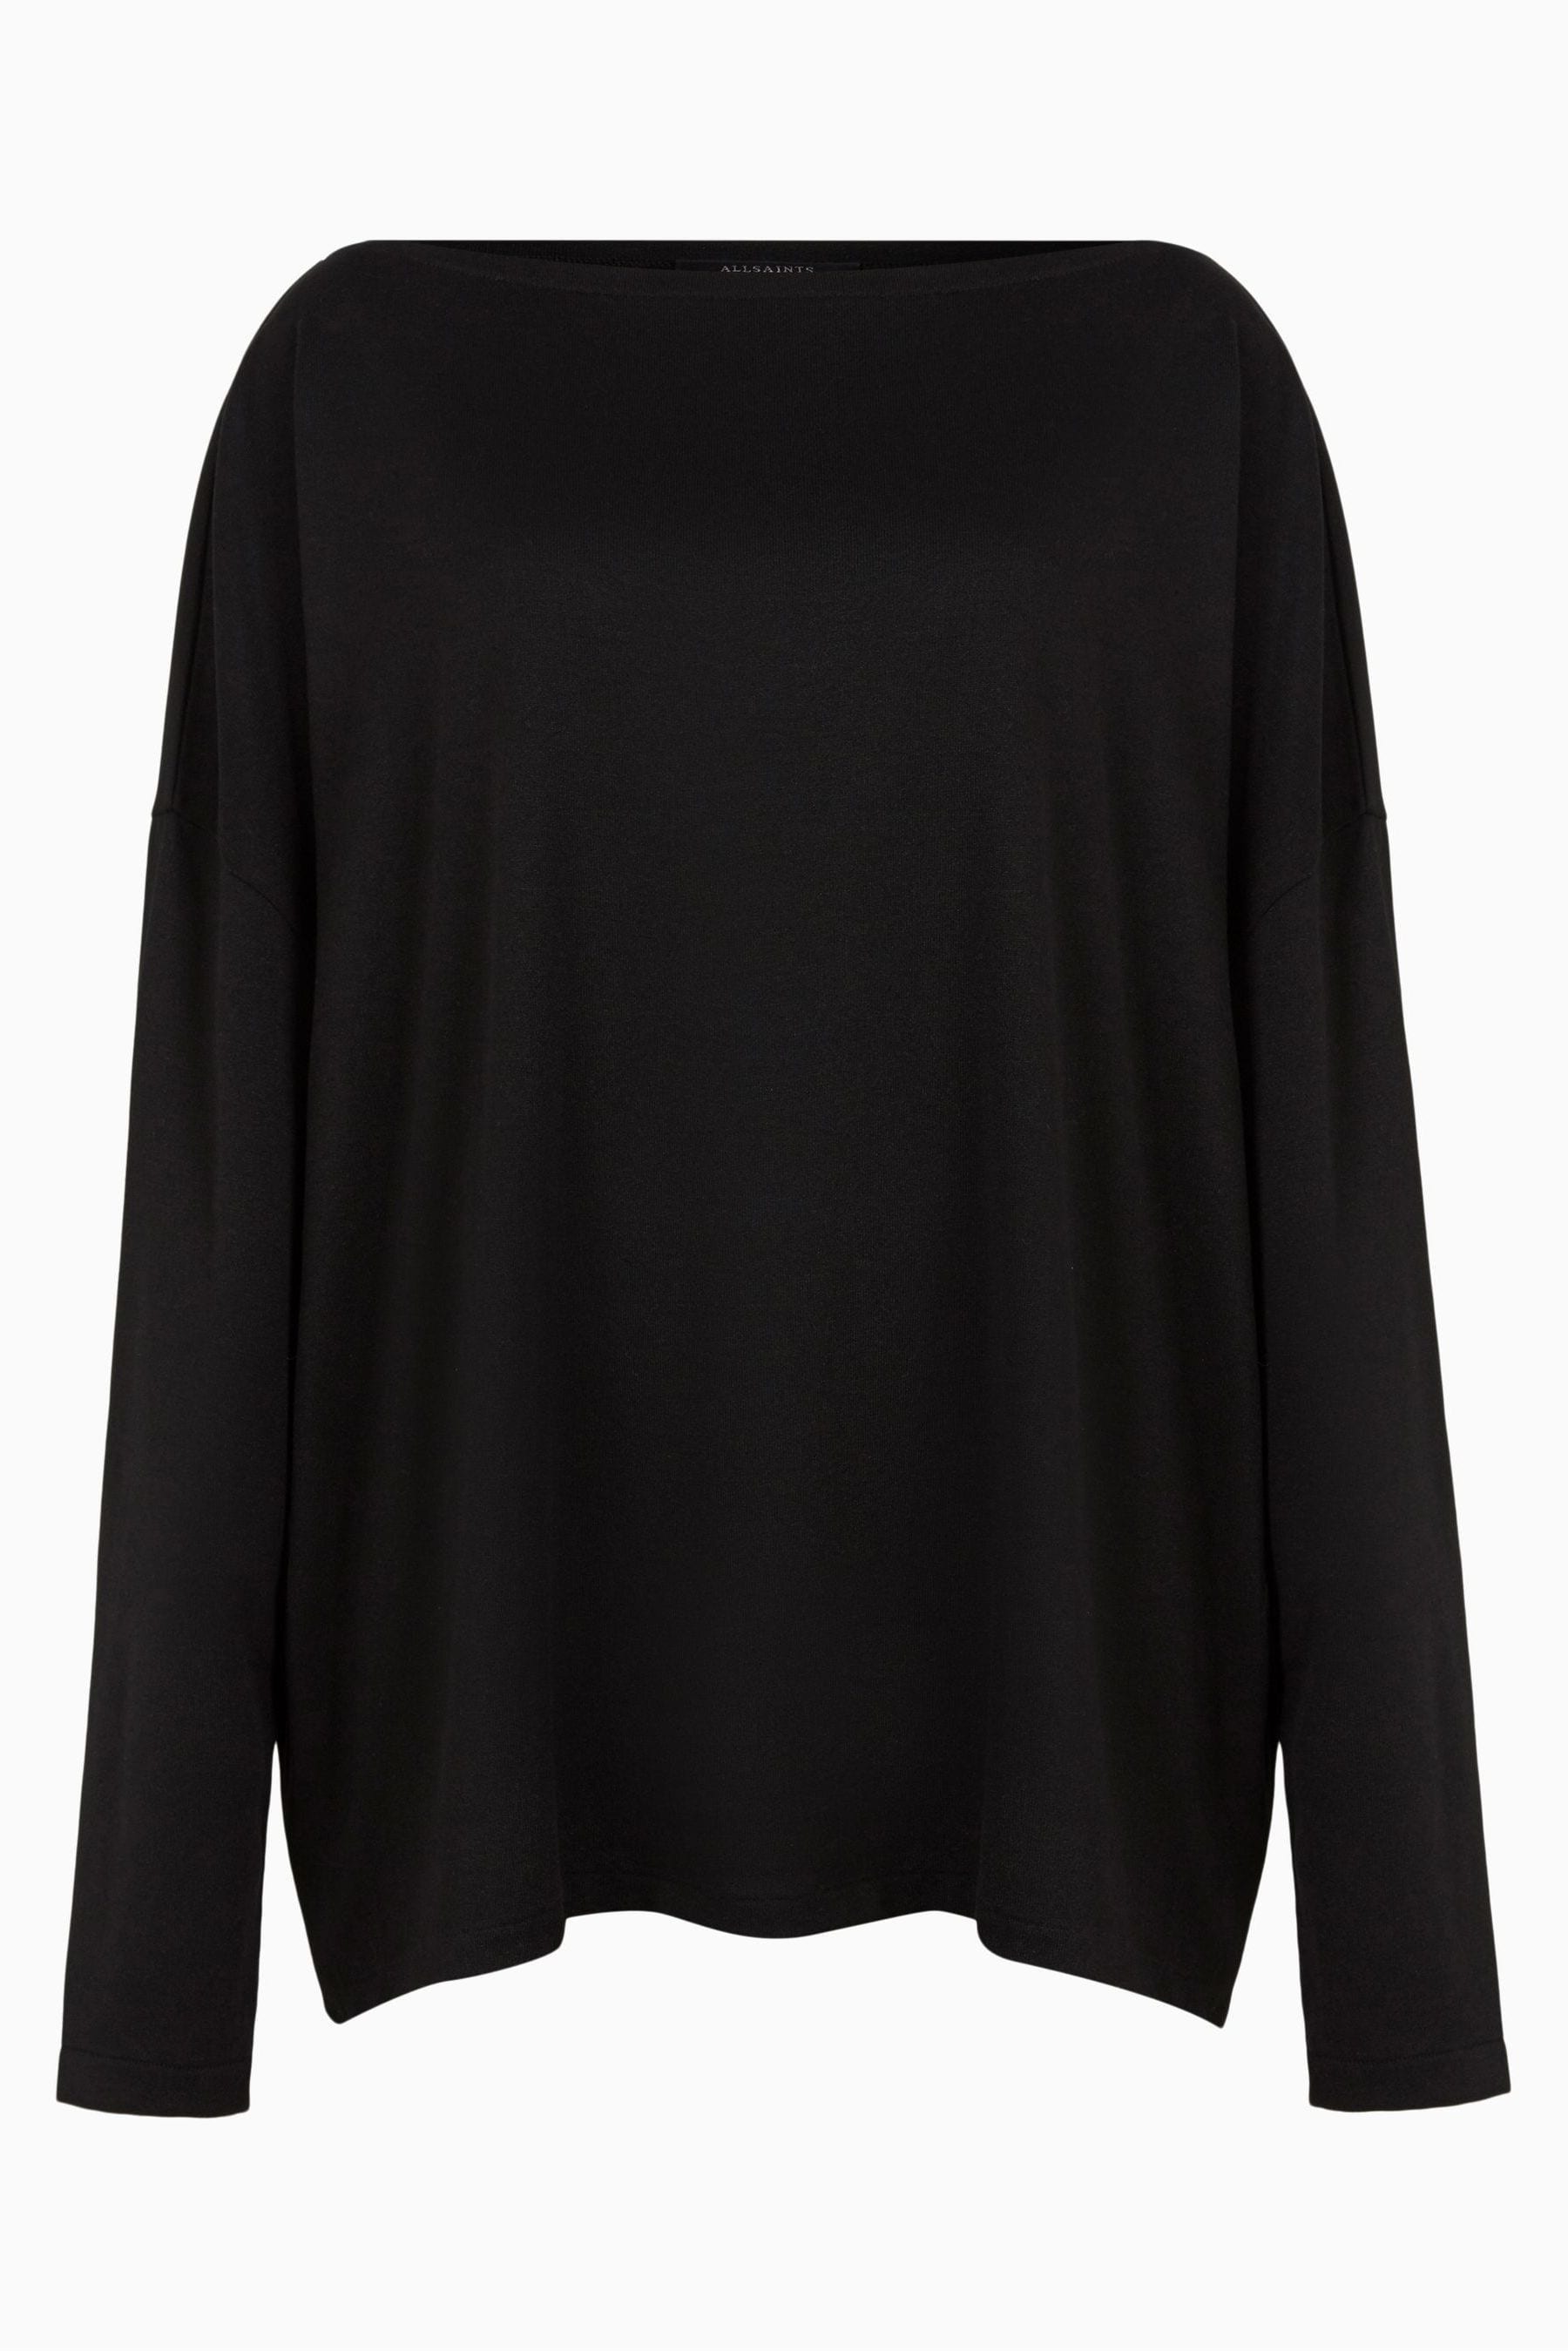 Buy AllSaints Off The Shoulder Rita Top from the Next UK online shop